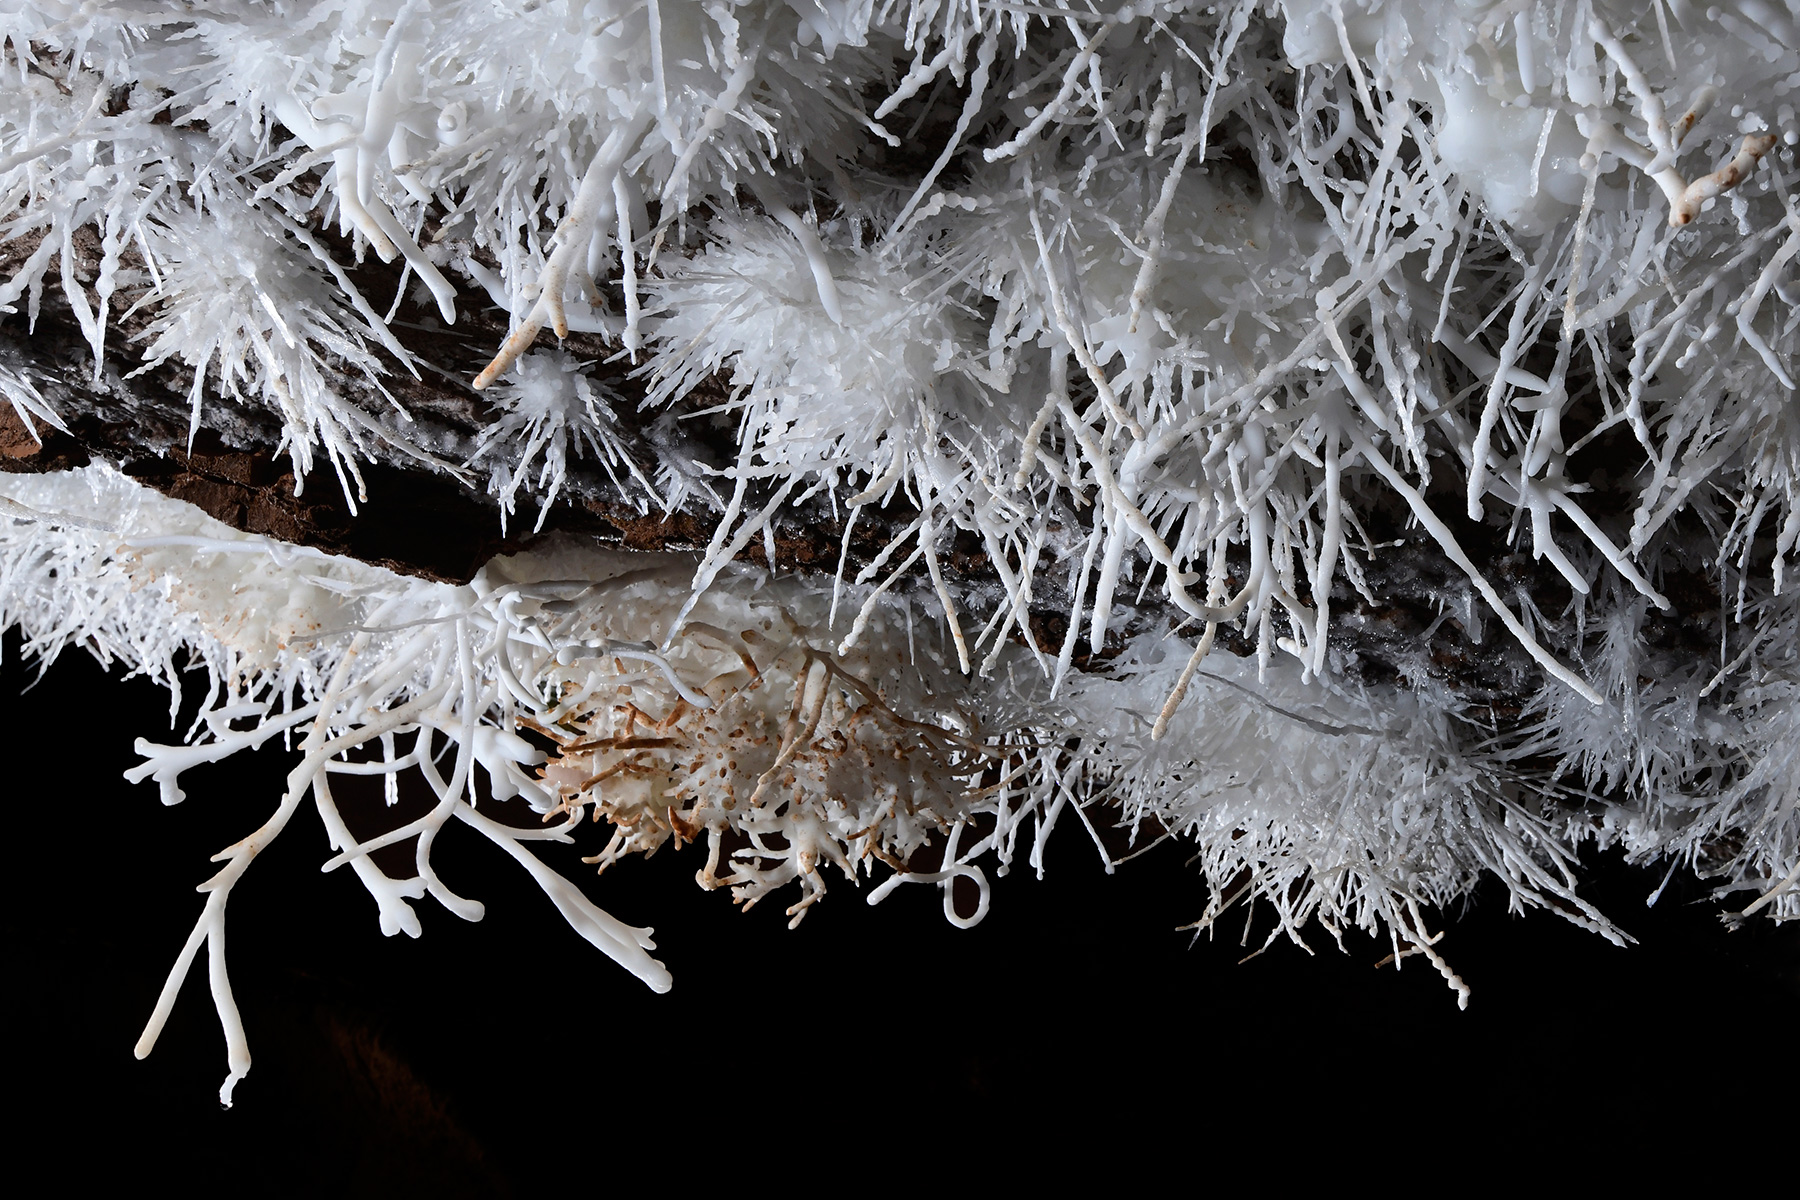 Breezeaway Cave (USA - Colorado) - Plafond couvert d'aragonites coralloïdes blanches